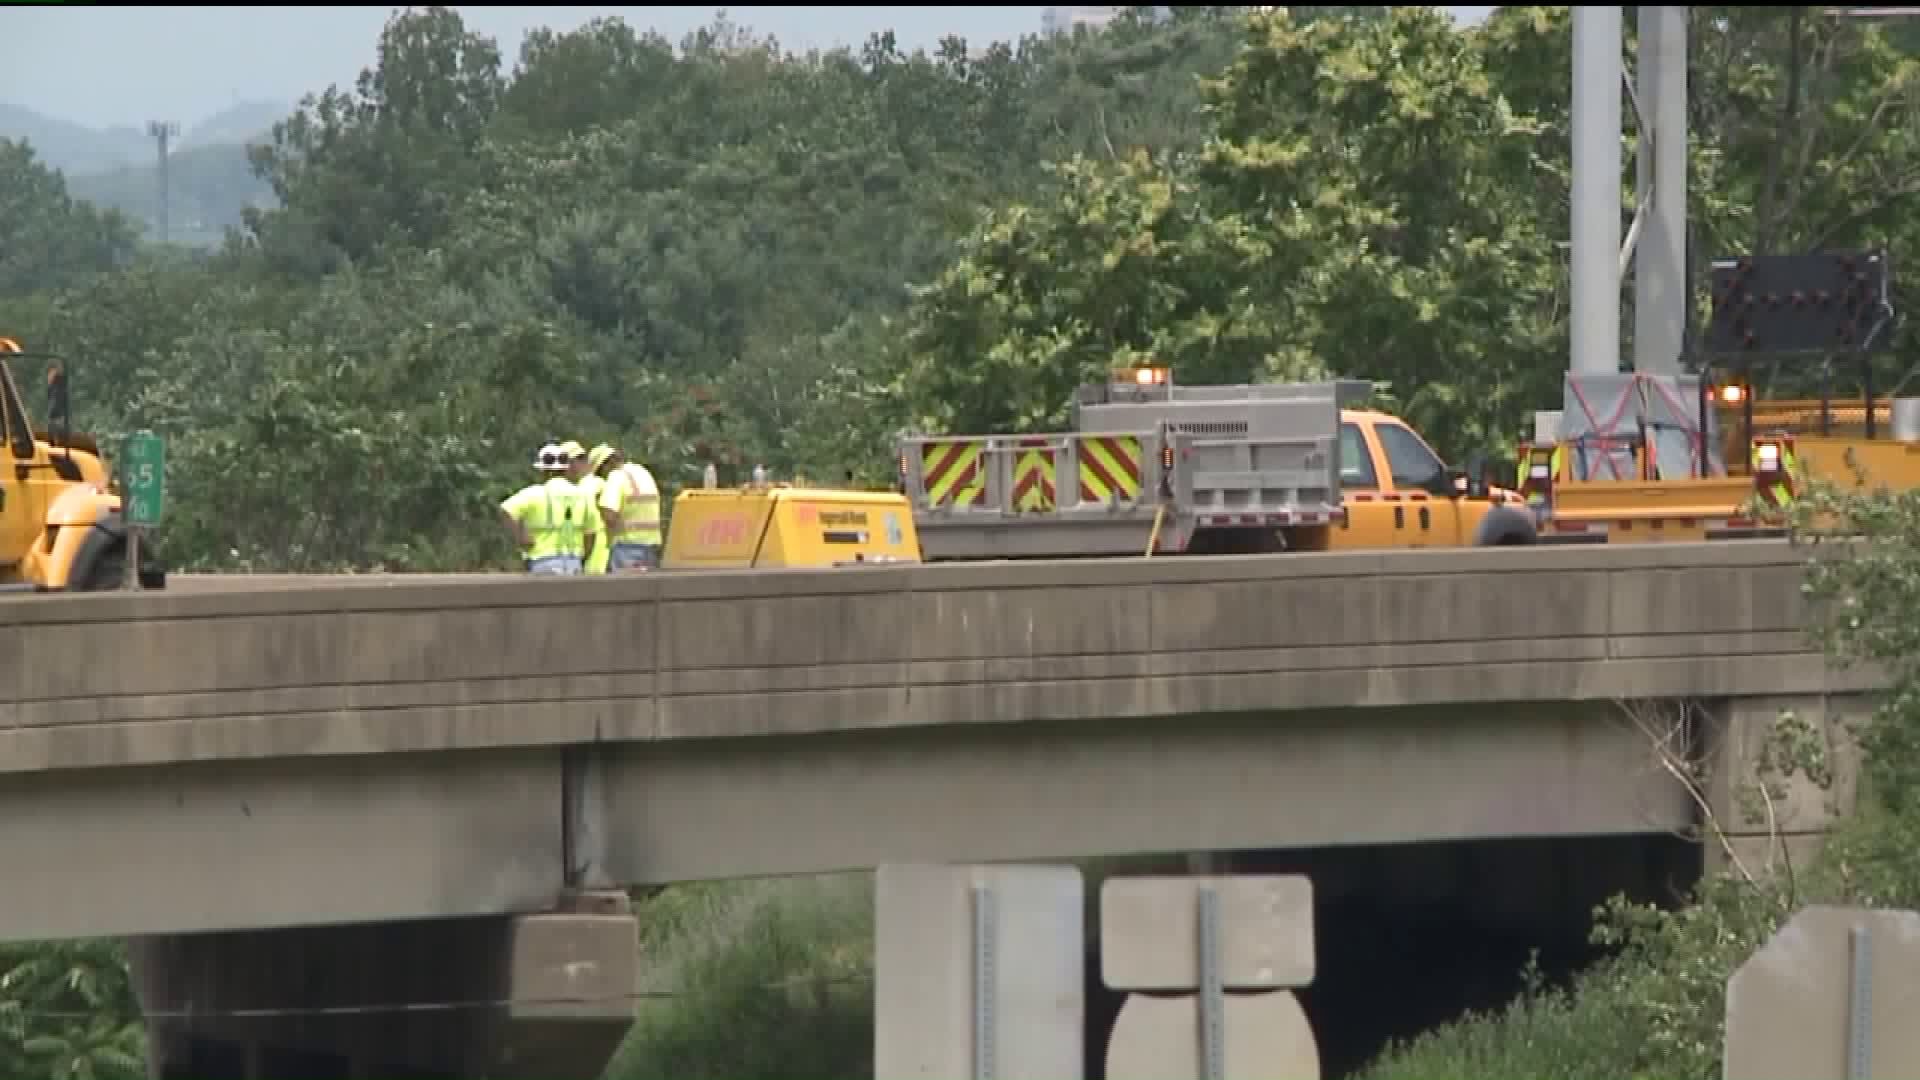 Bridge Repairs Slow I-81 Traffic in Luzerne County